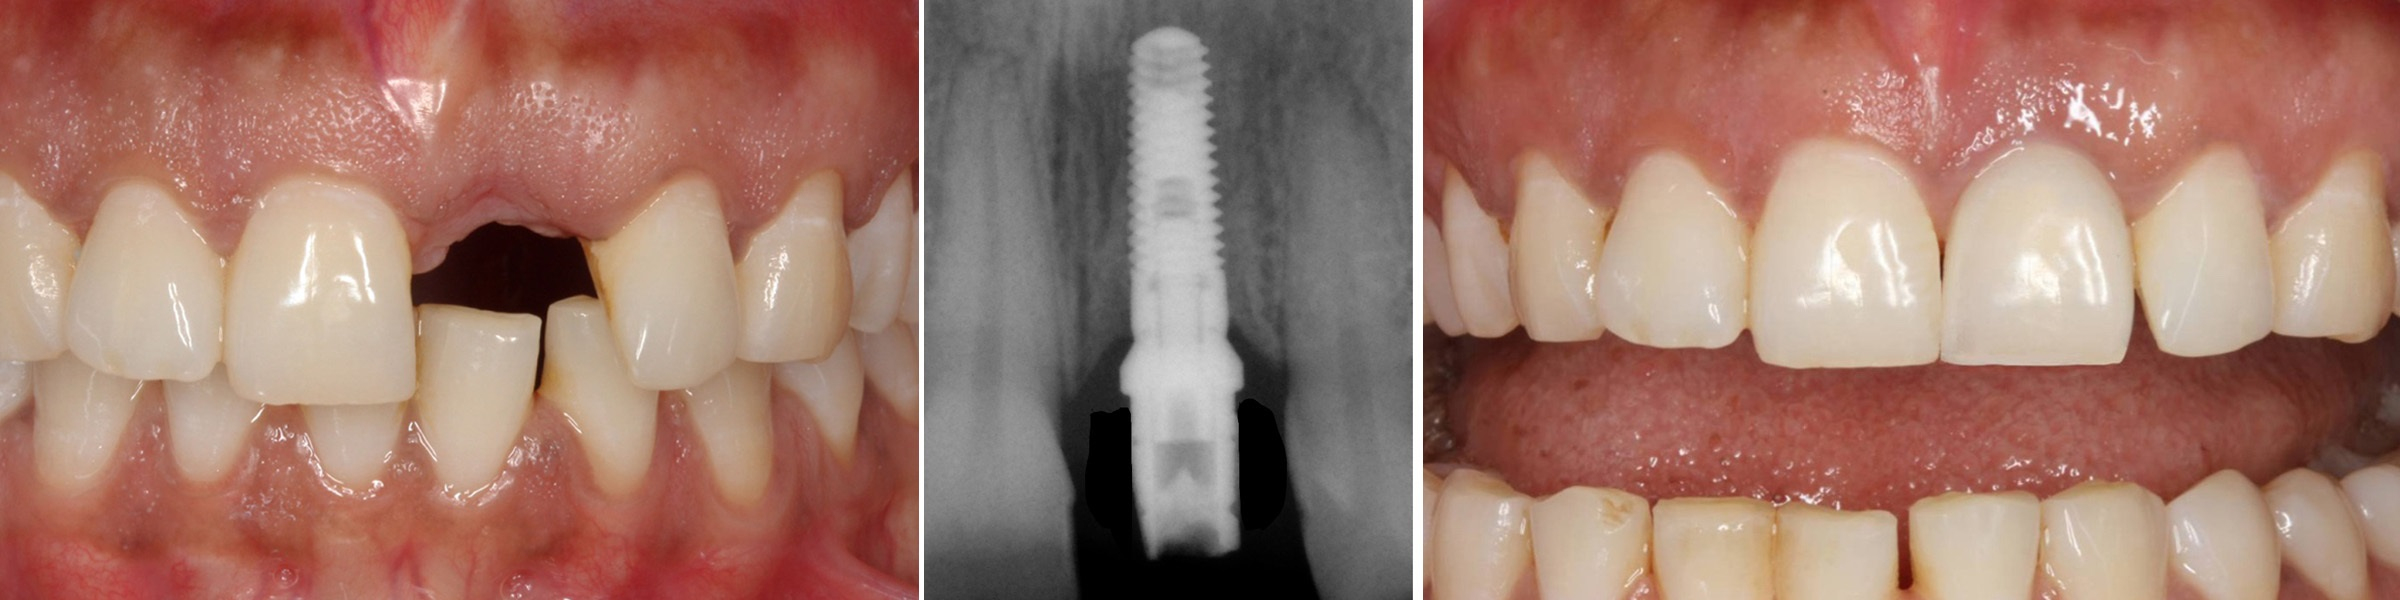 Nw Houston Prosthodontics - Dental Implant Gallery serapportantà Dentist Implants Northwest Houston